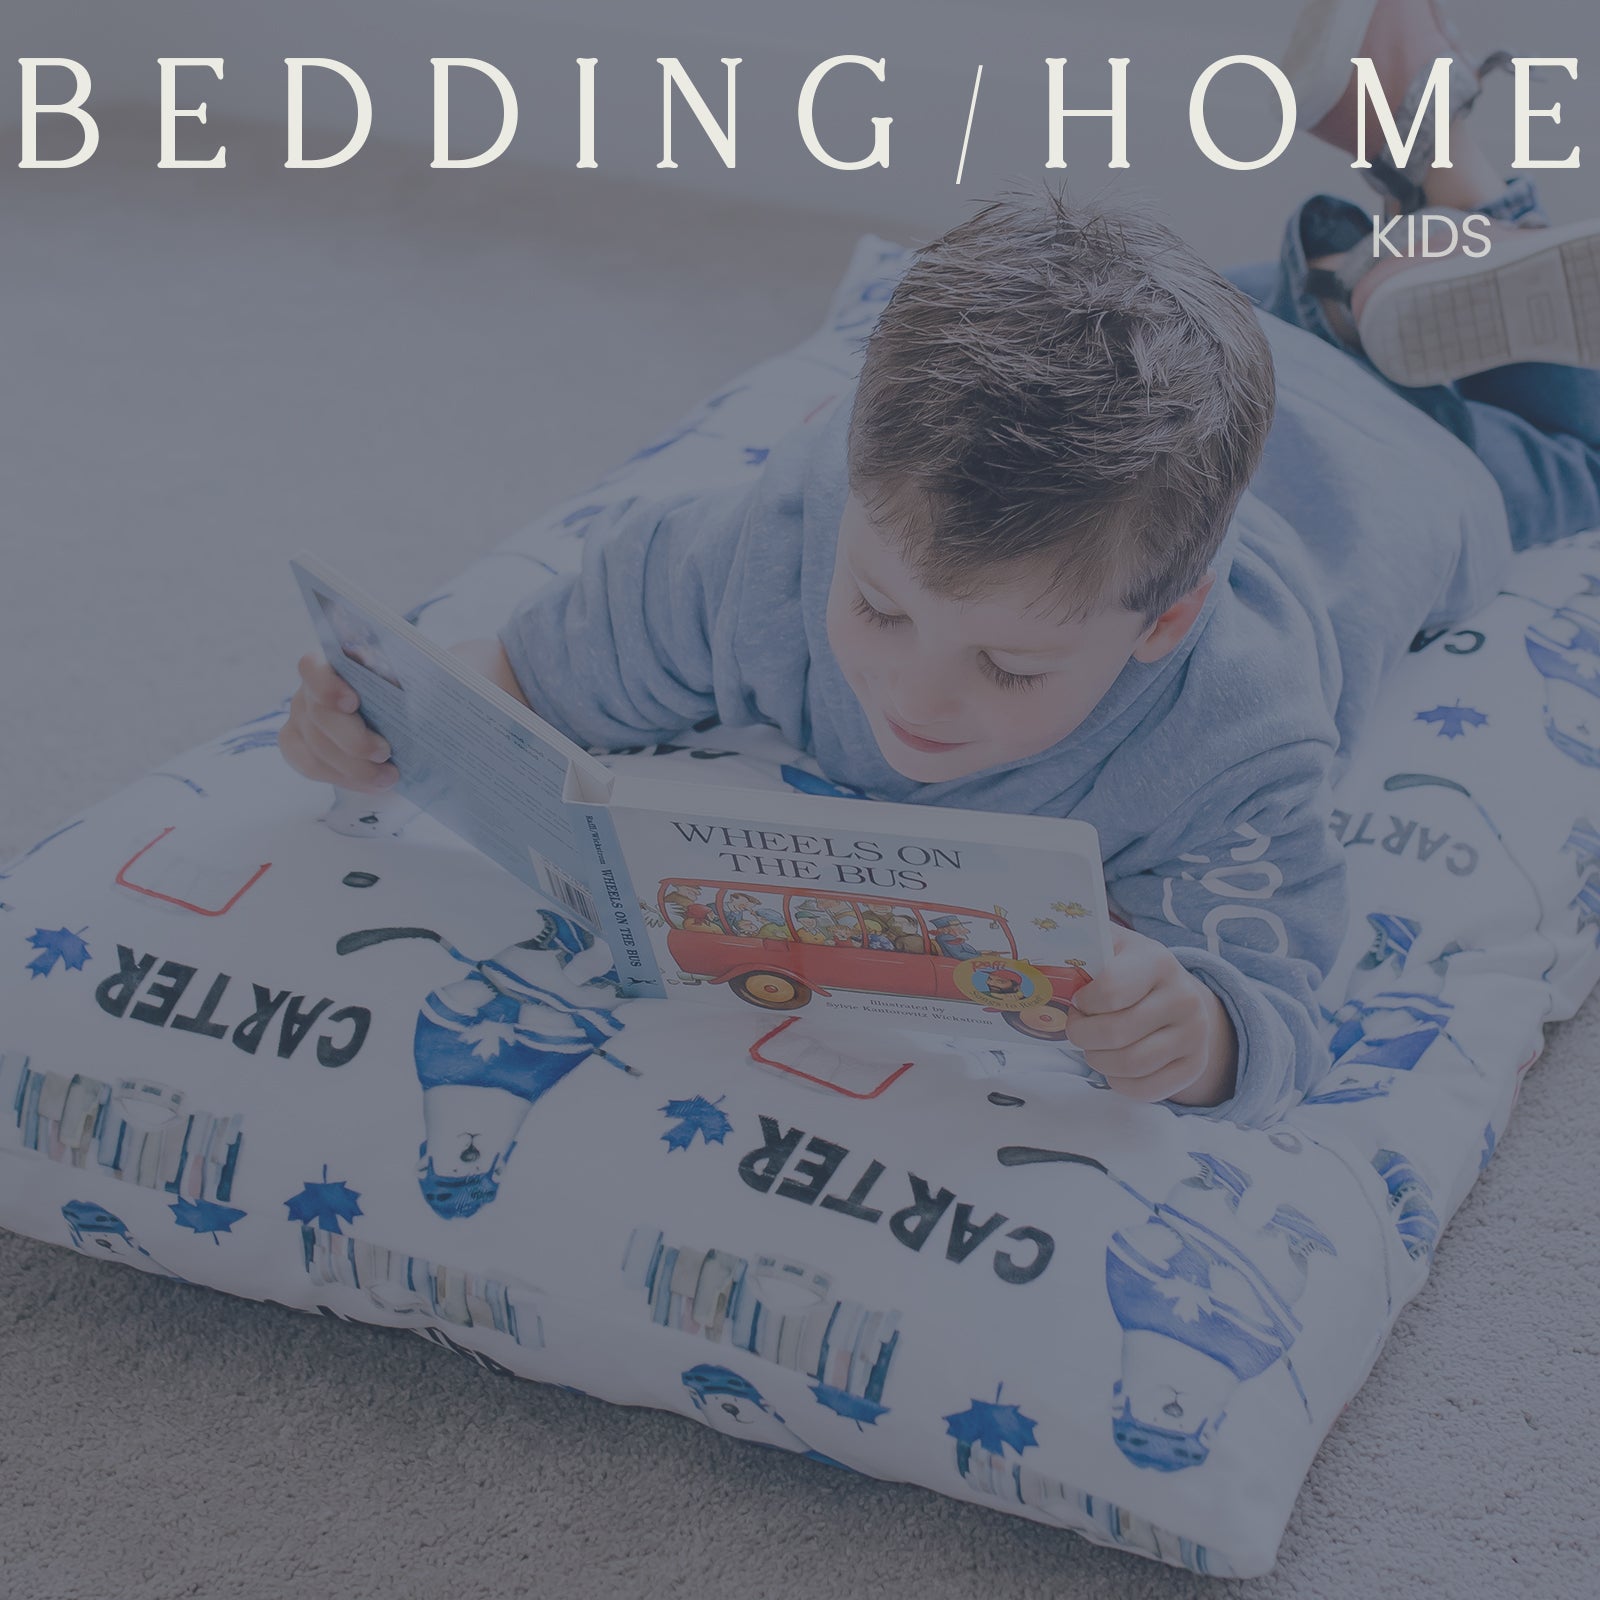 Kids - Bedding/Home